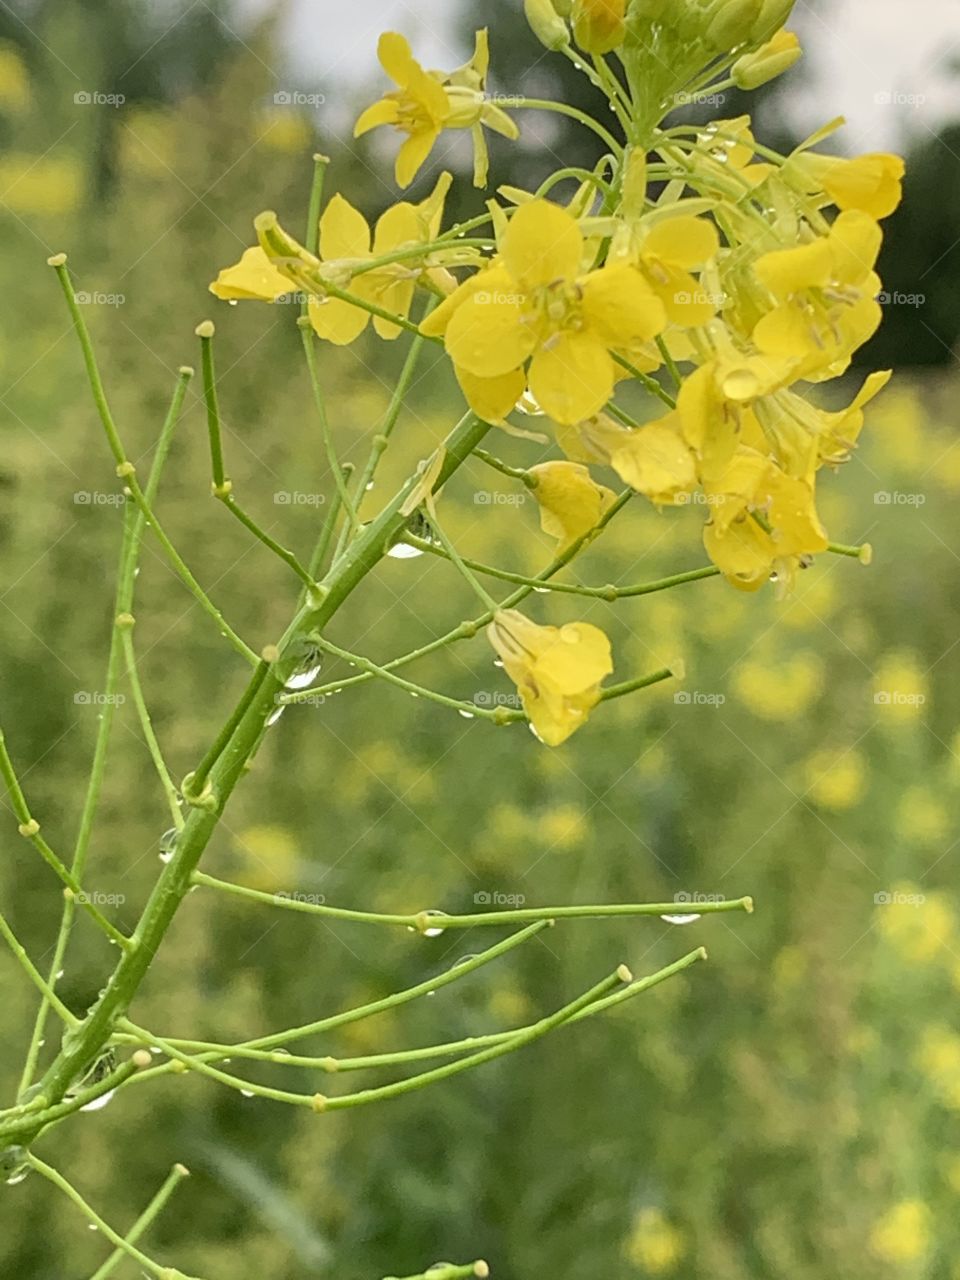 Water droplets in closeup of a flower head in a blurred field of Littlepod False Flax 